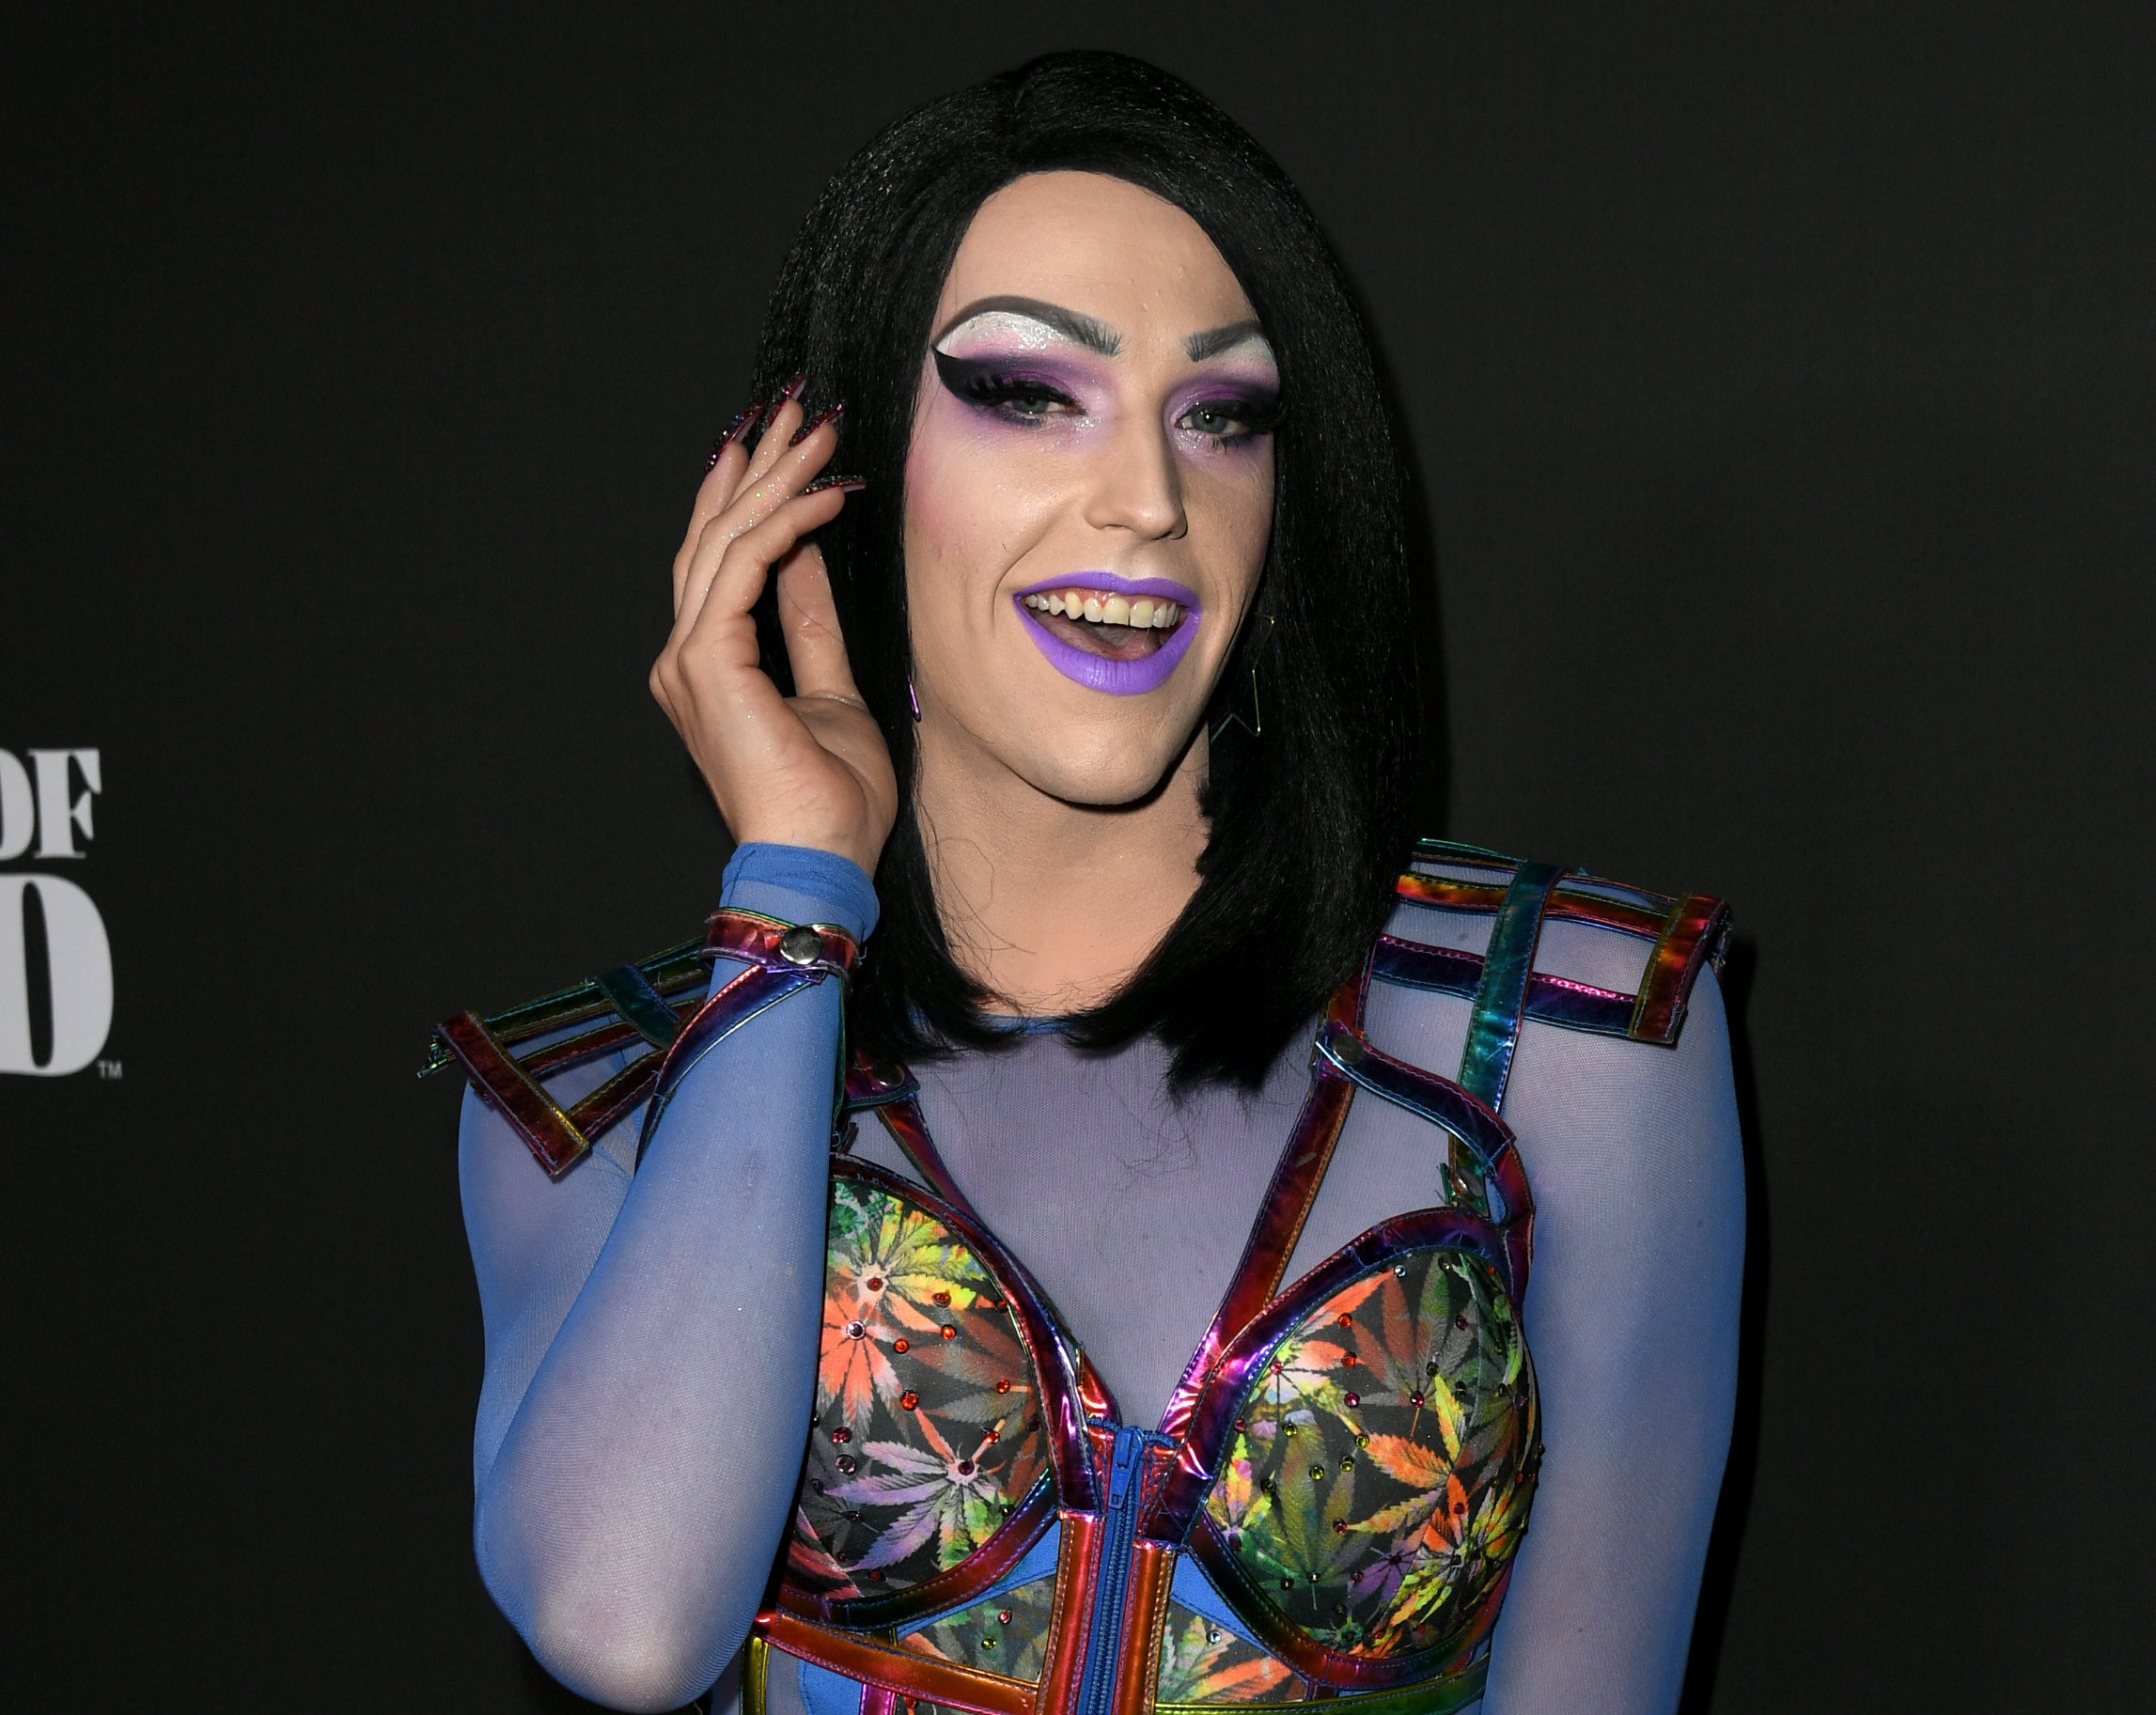 Laganja smiles while wearing a short black wig and purple makeup